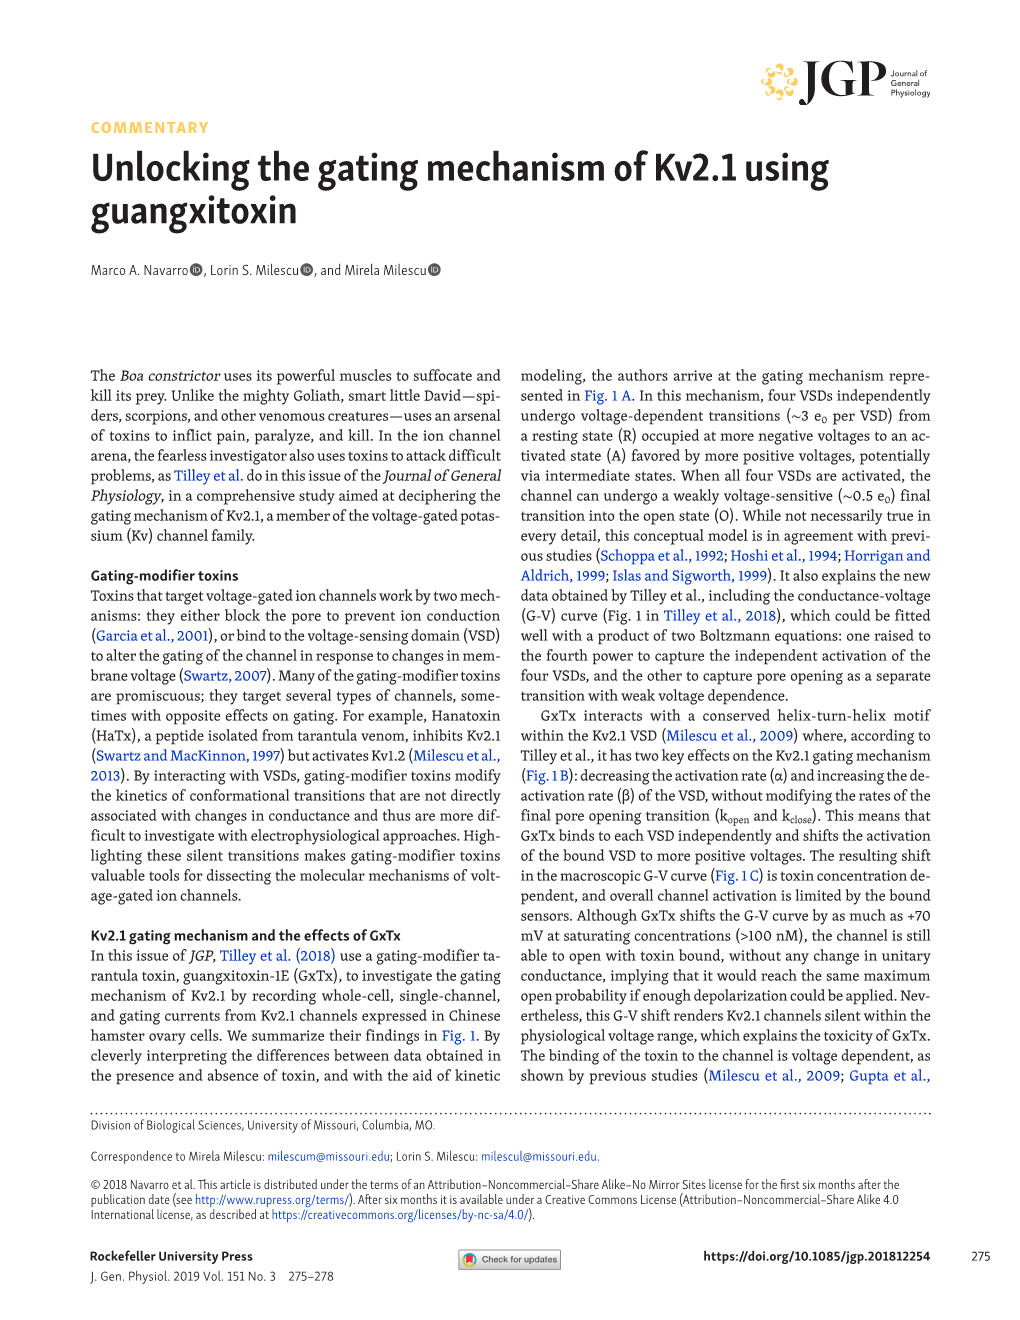 Unlocking the Gating Mechanism of Kv2.1 Using Guangxitoxin